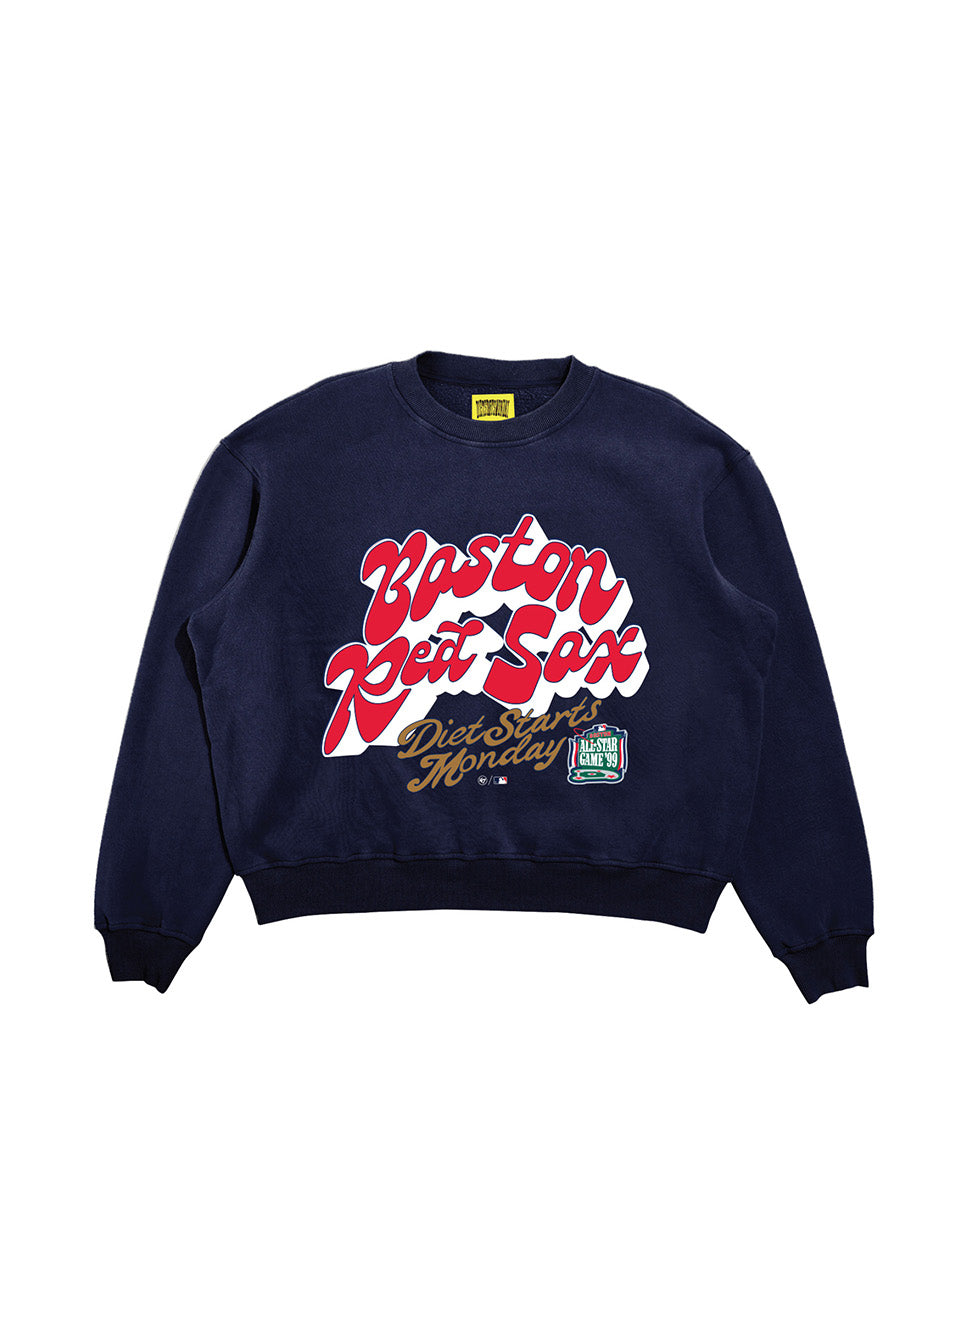 Red Sox 99 ASG Sweatshirt - Navy